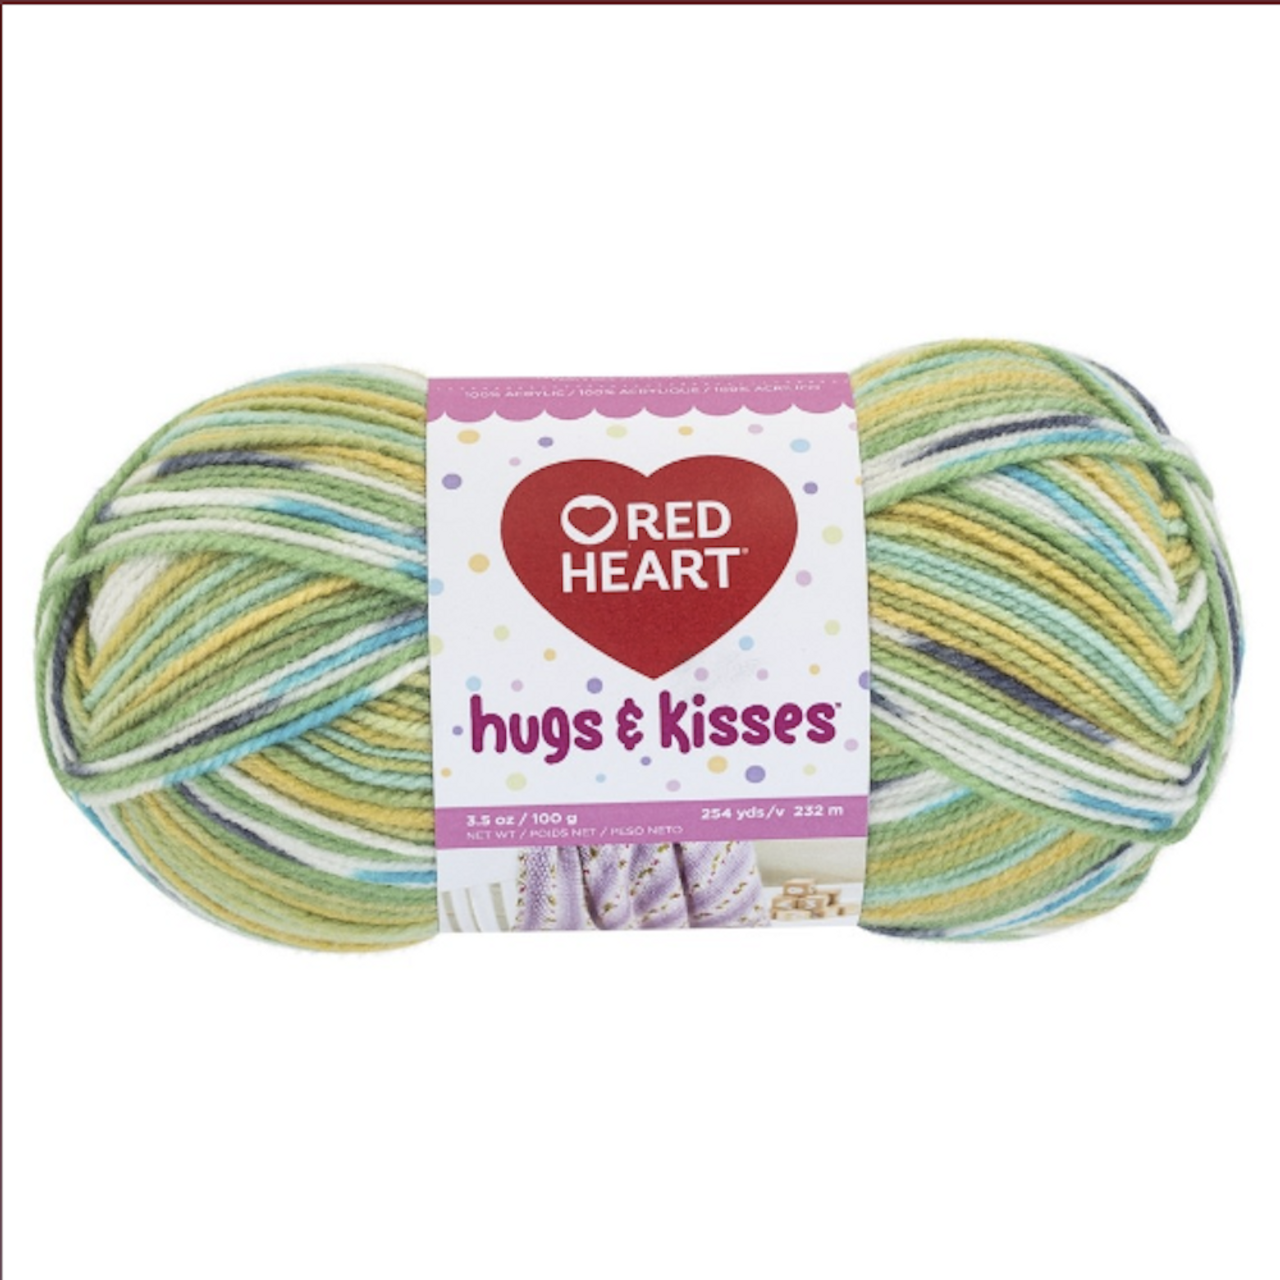 Red Heart Hugs & Kisses Kiwi Knitting & Crochet Yarn